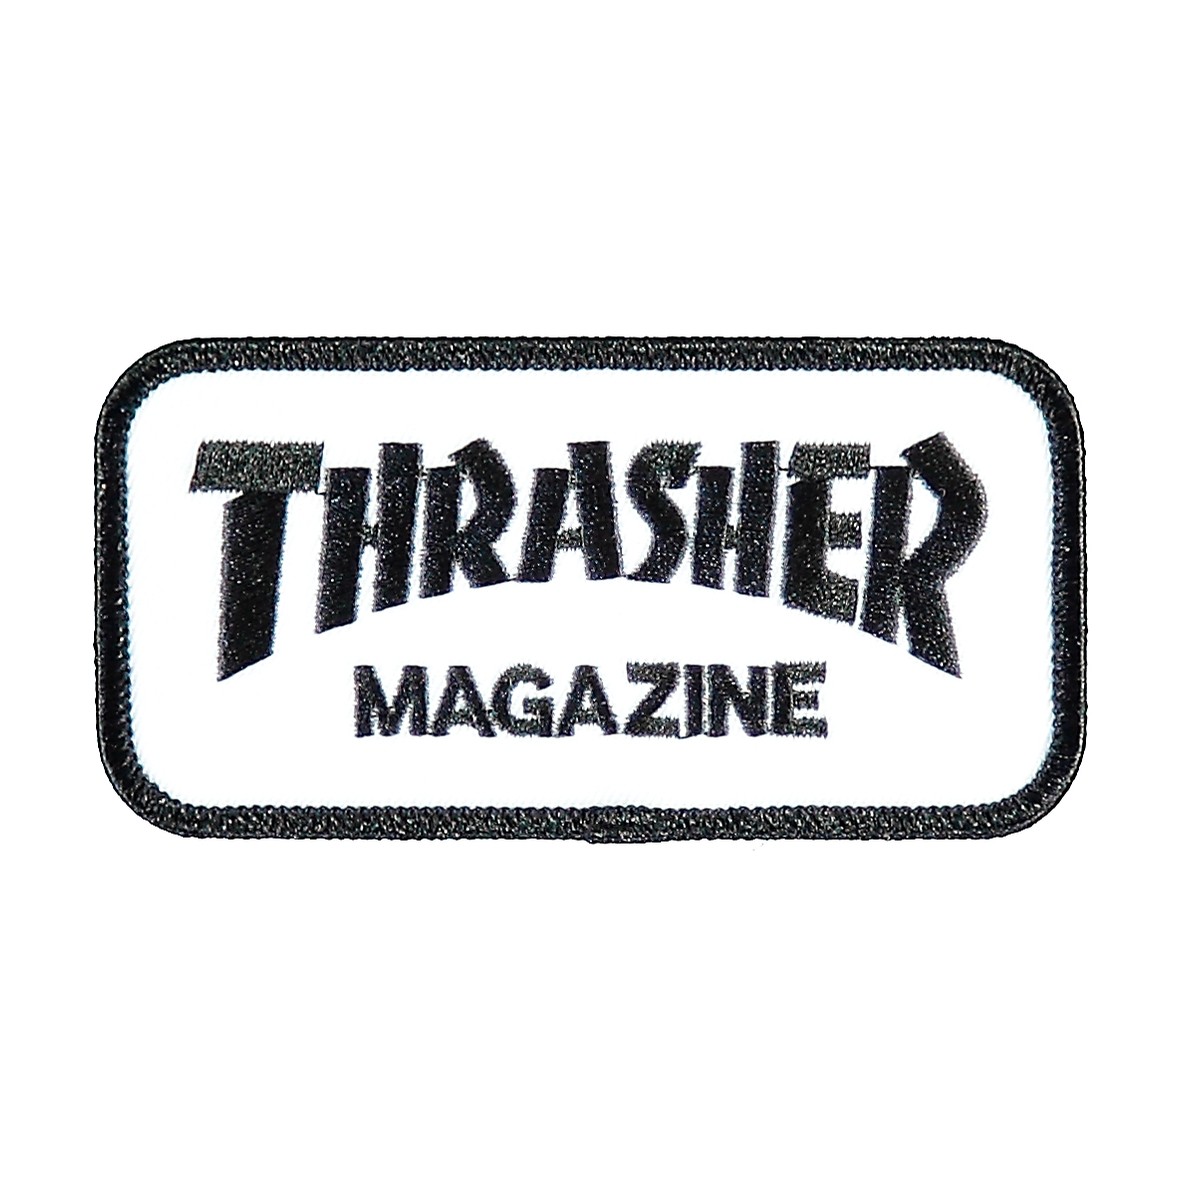 Я считаю бирки на мне. Трешер логотип. Thrasher надпись. Трешер лого нашивка. Thrasher Magazine белая.